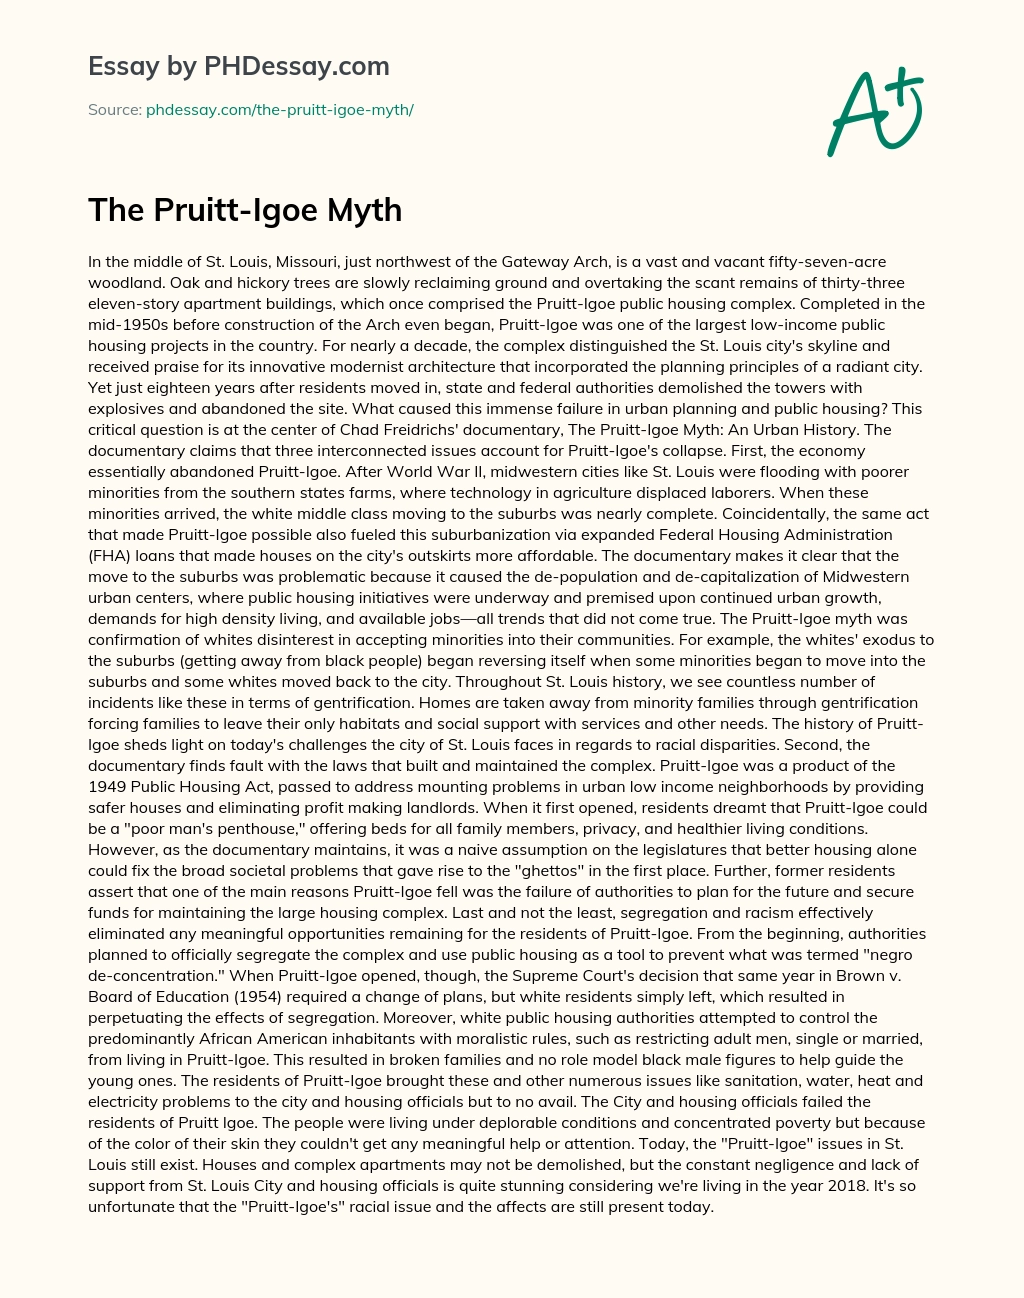 The Pruitt-Igoe Myth essay